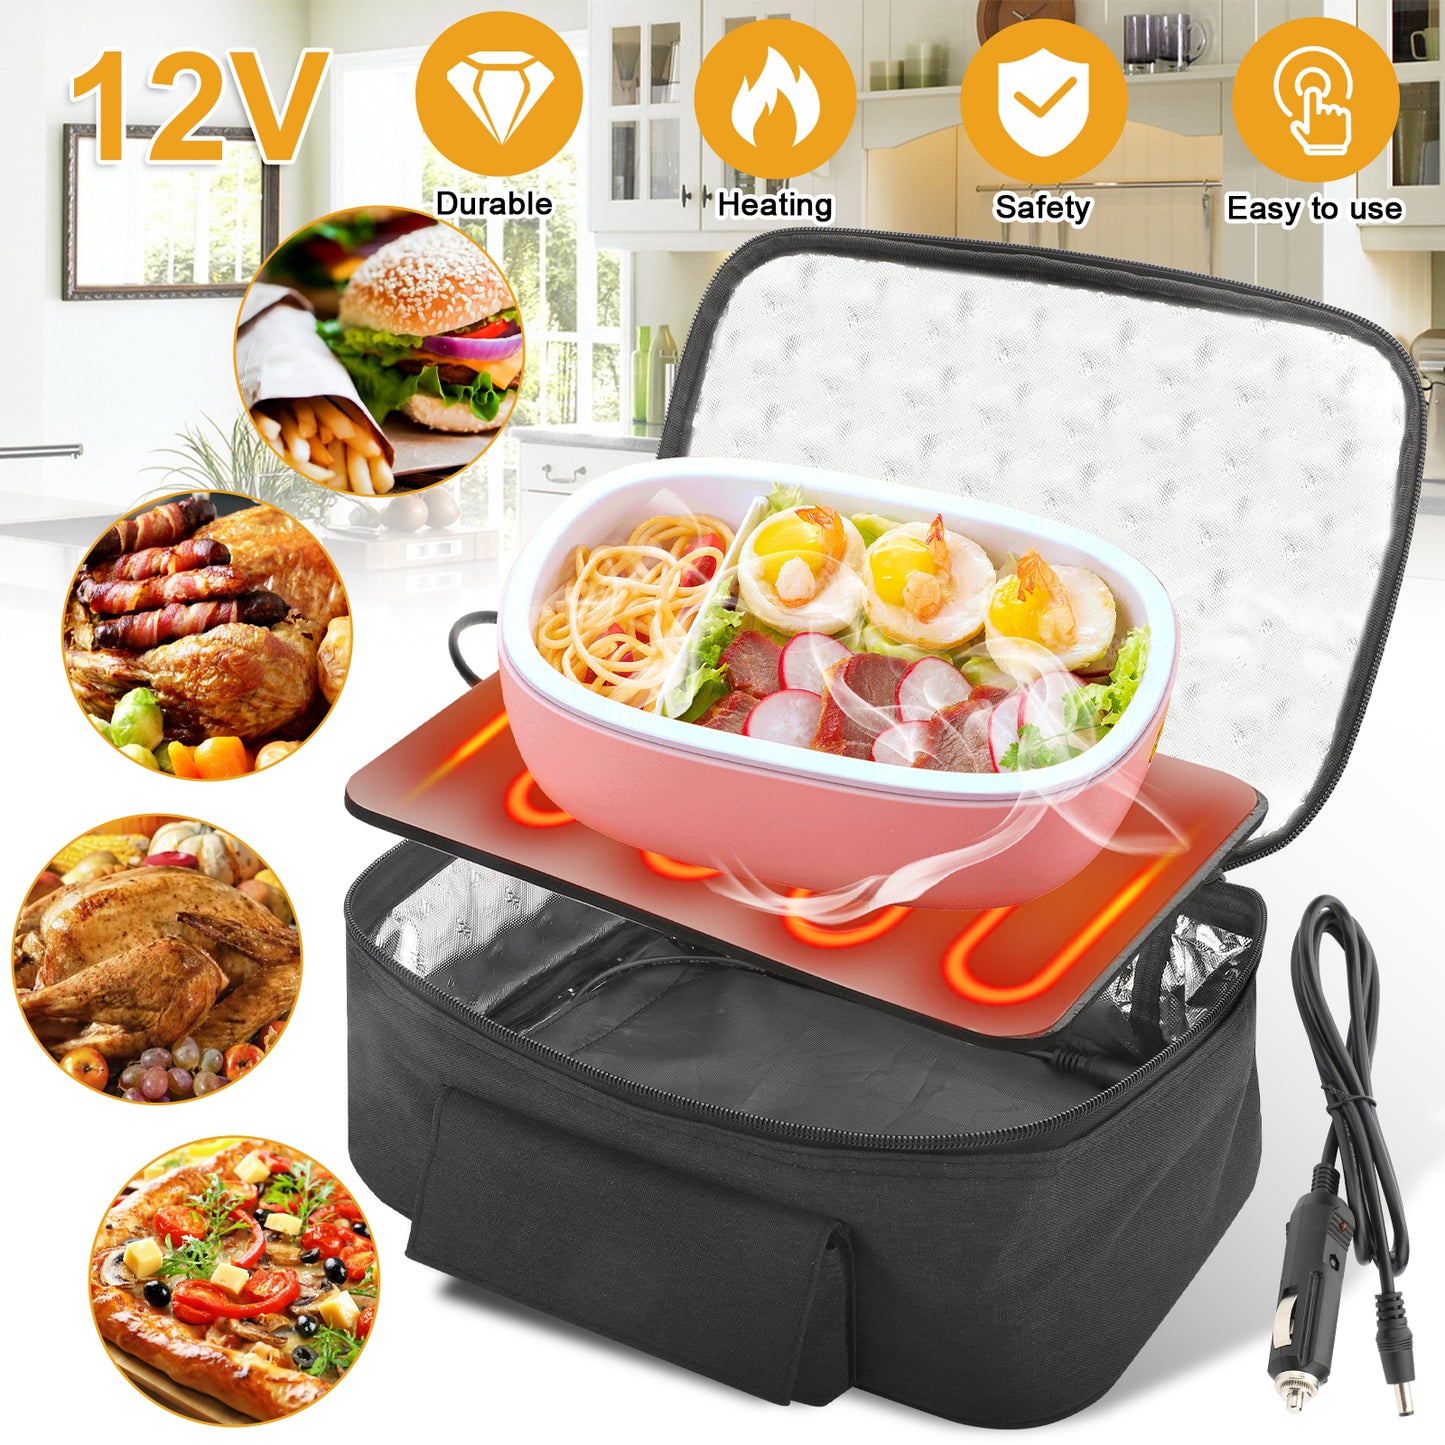 12V Portable Food warming Lunch box